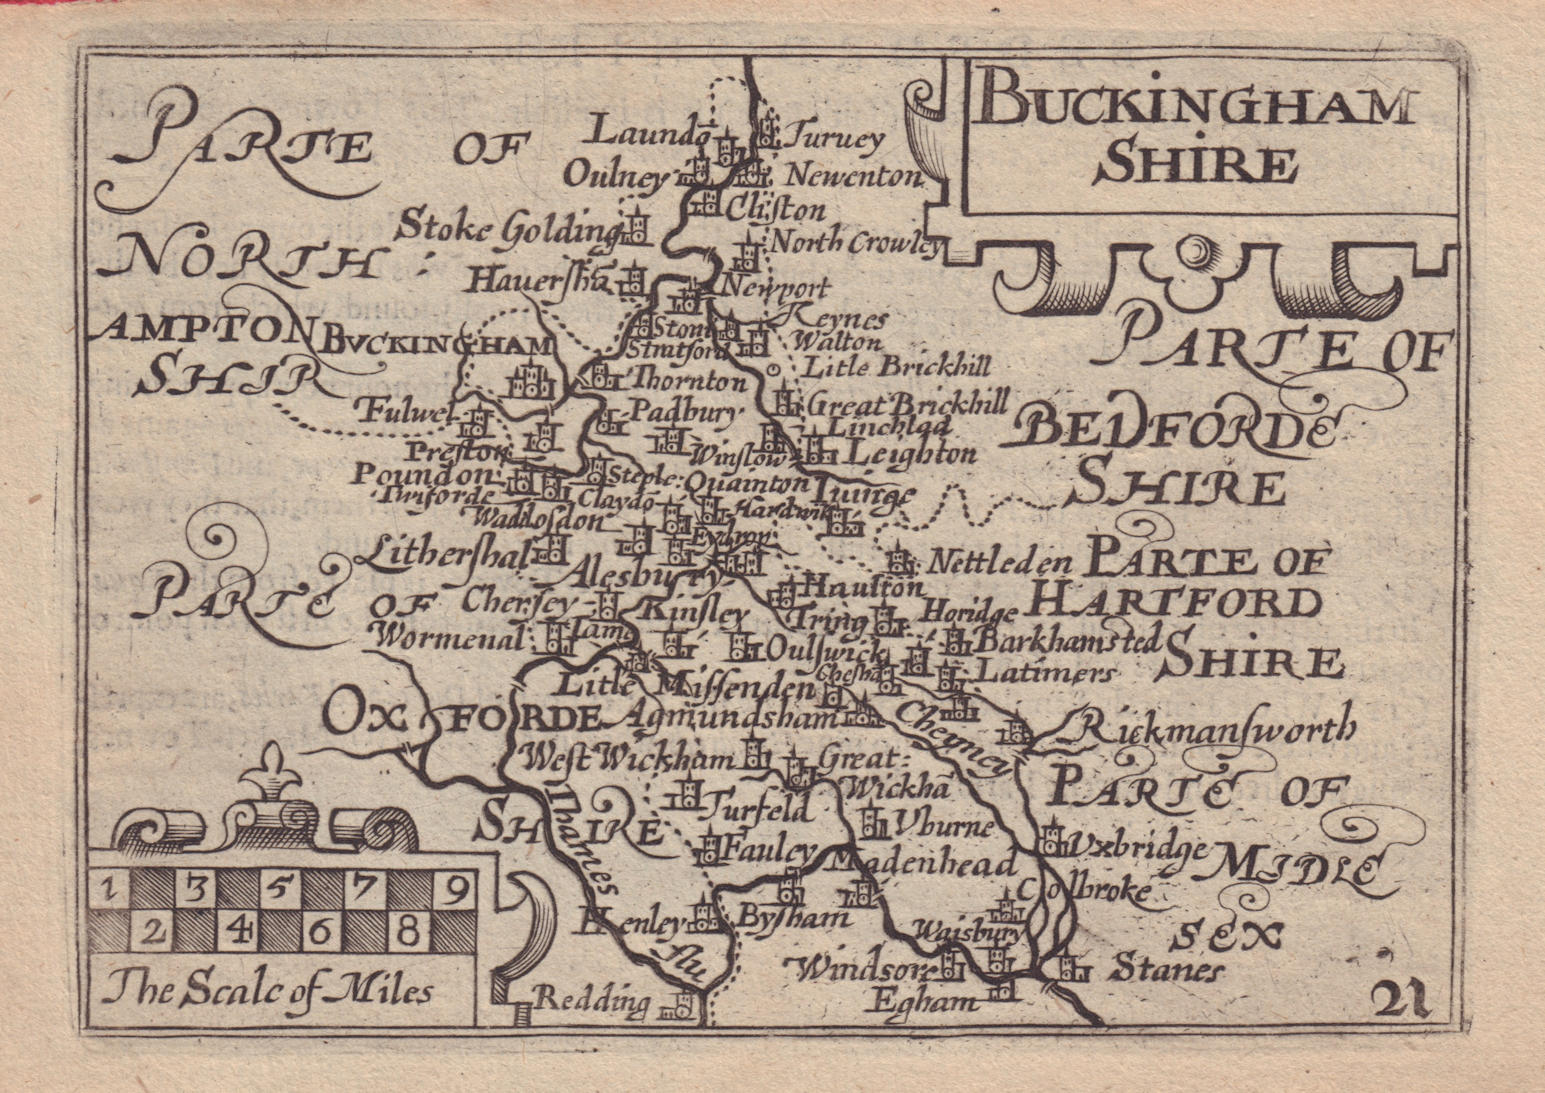 Associate Product Buckingham Shire by Keere. "Speed miniature" Buckinghamshire county map 1632